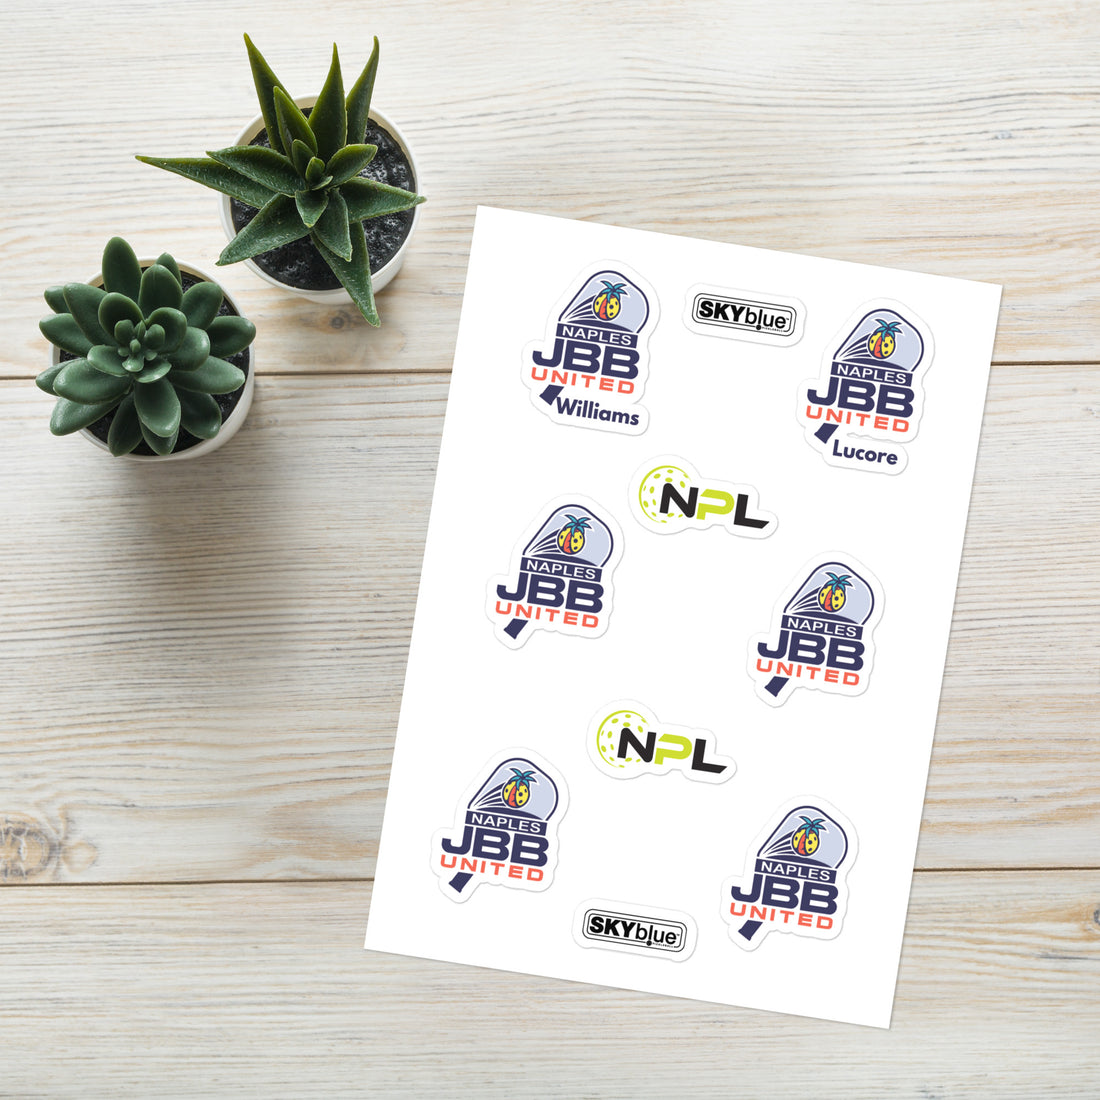 Naples JBB United™ - NPL™ Stickers  - Williams Lucore